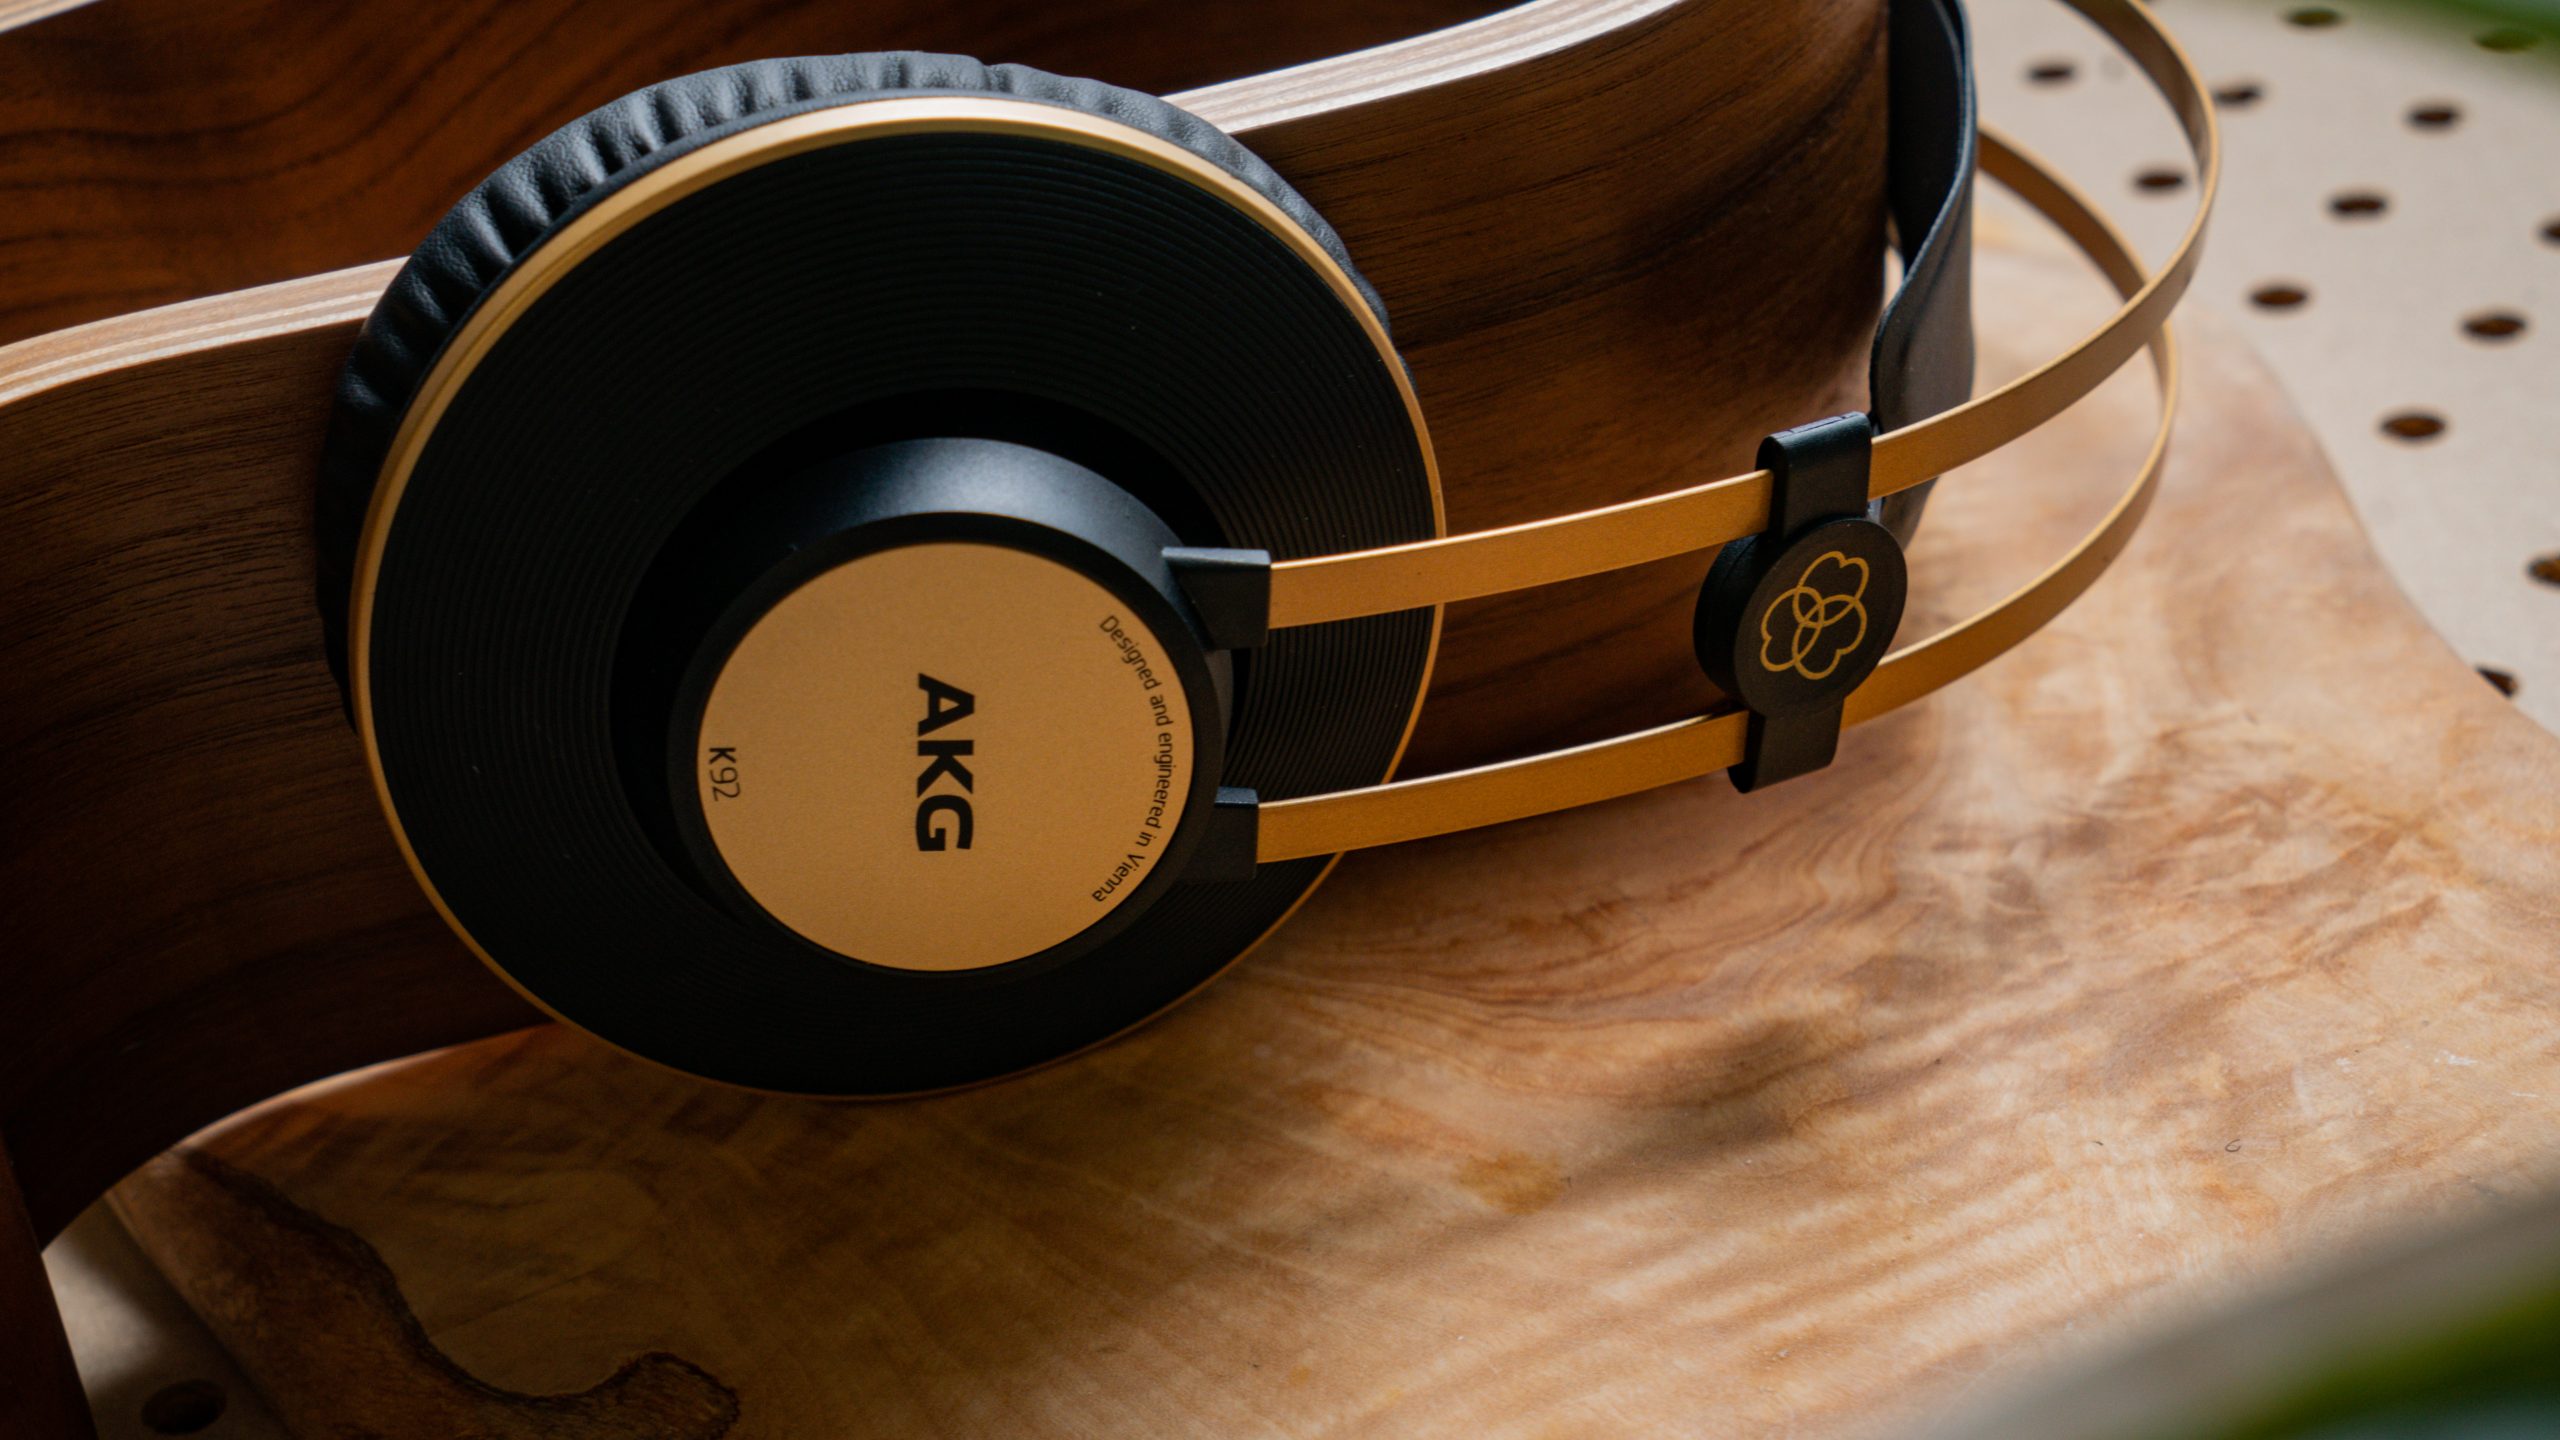  AKG Pro Audio K92 Over-Ear, Closed-Back, Studio Headphones,  Matte Black and Gold : Musical Instruments